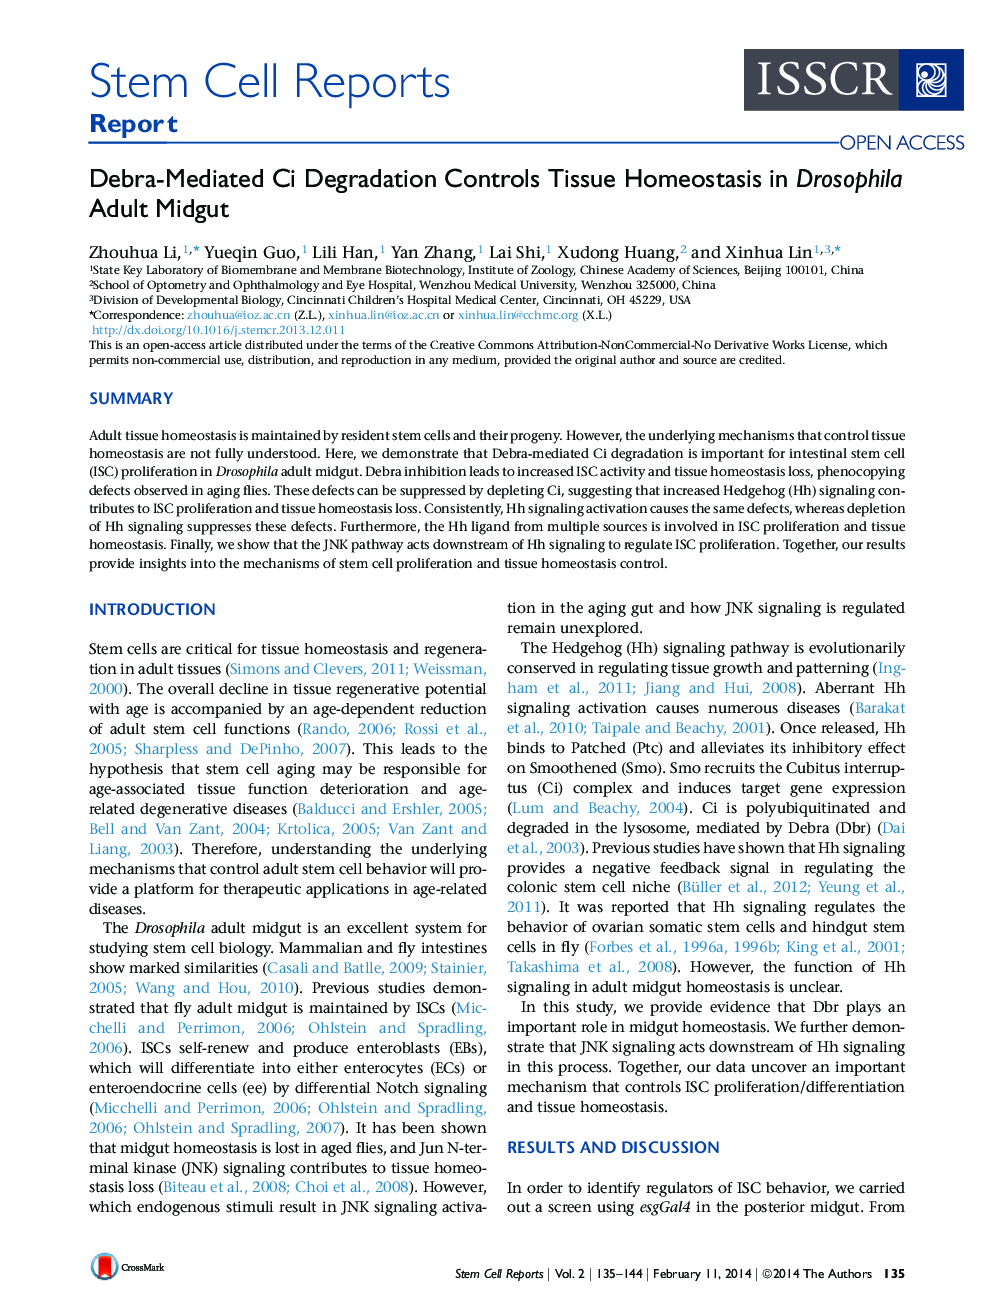 Debra-Mediated Ci Degradation Controls Tissue Homeostasis in Drosophila Adult Midgut 